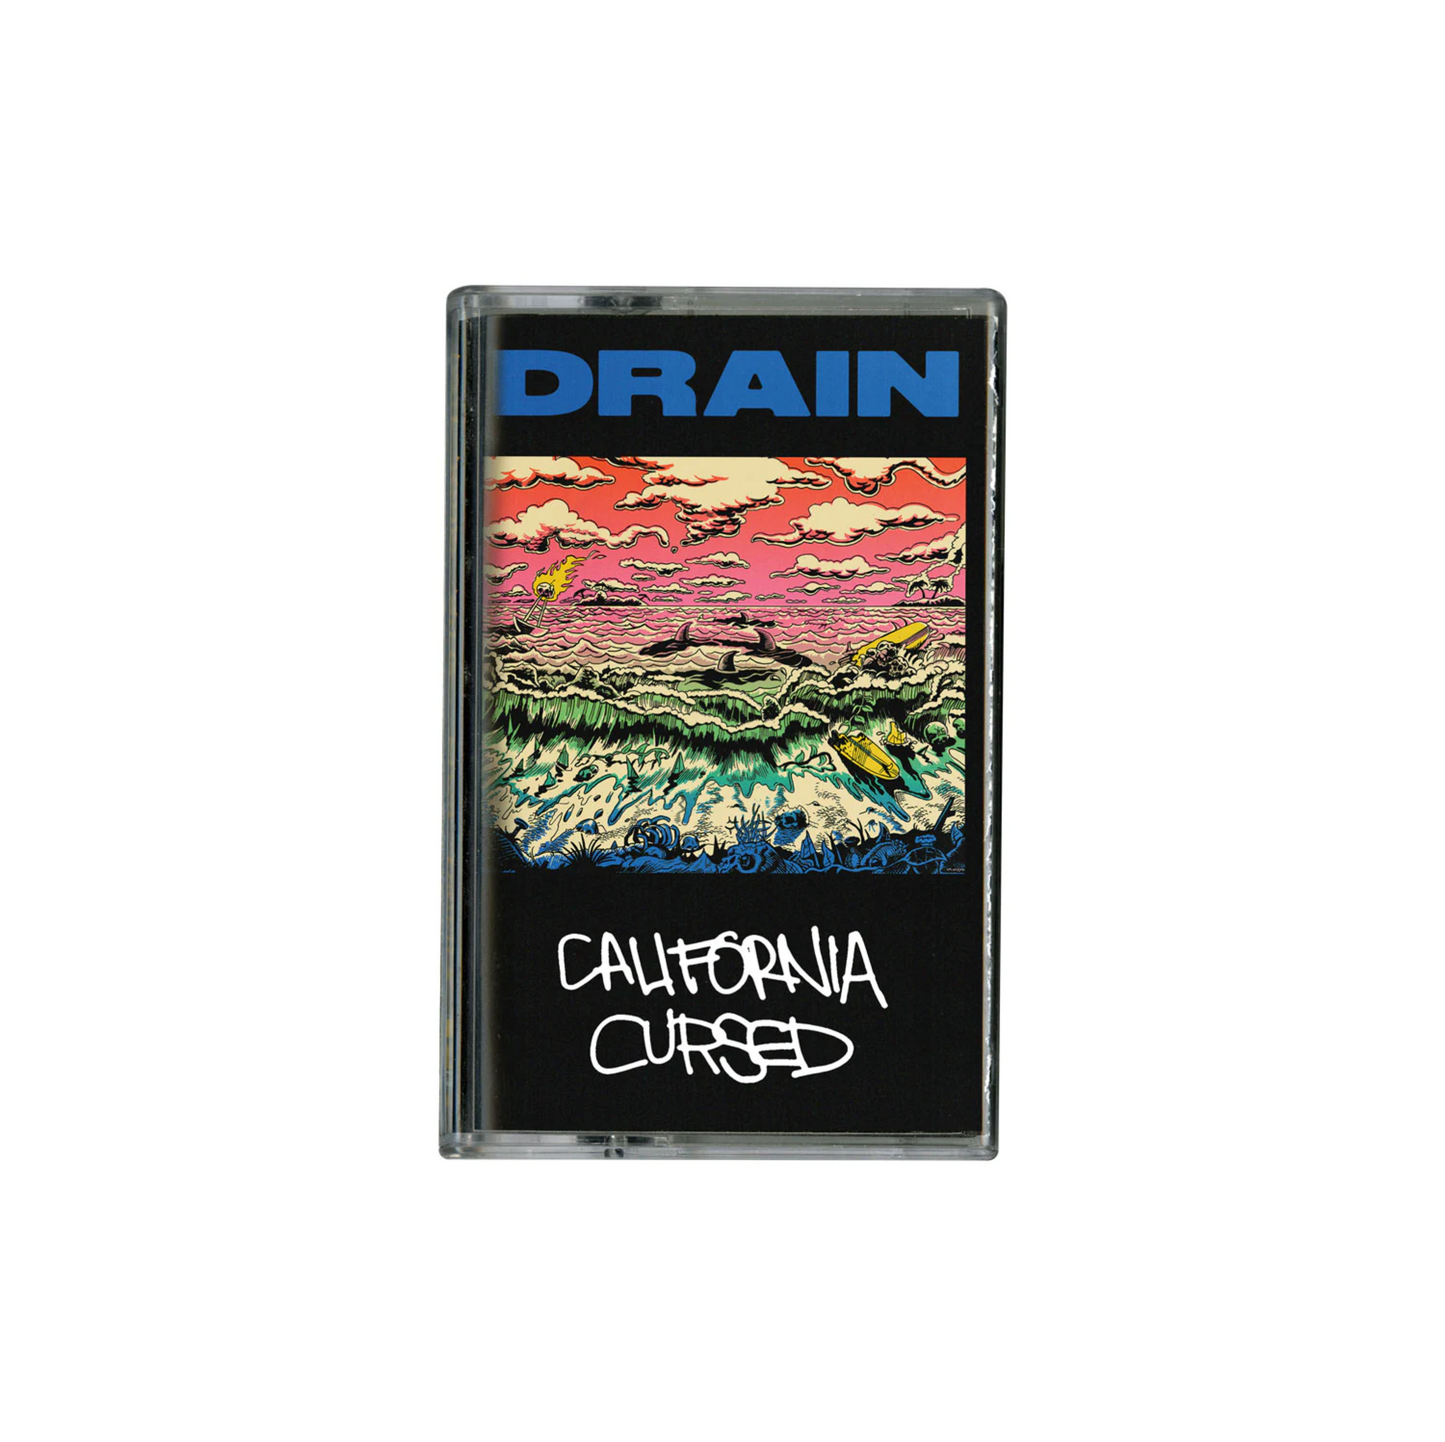 Drain "California Cursed" CS